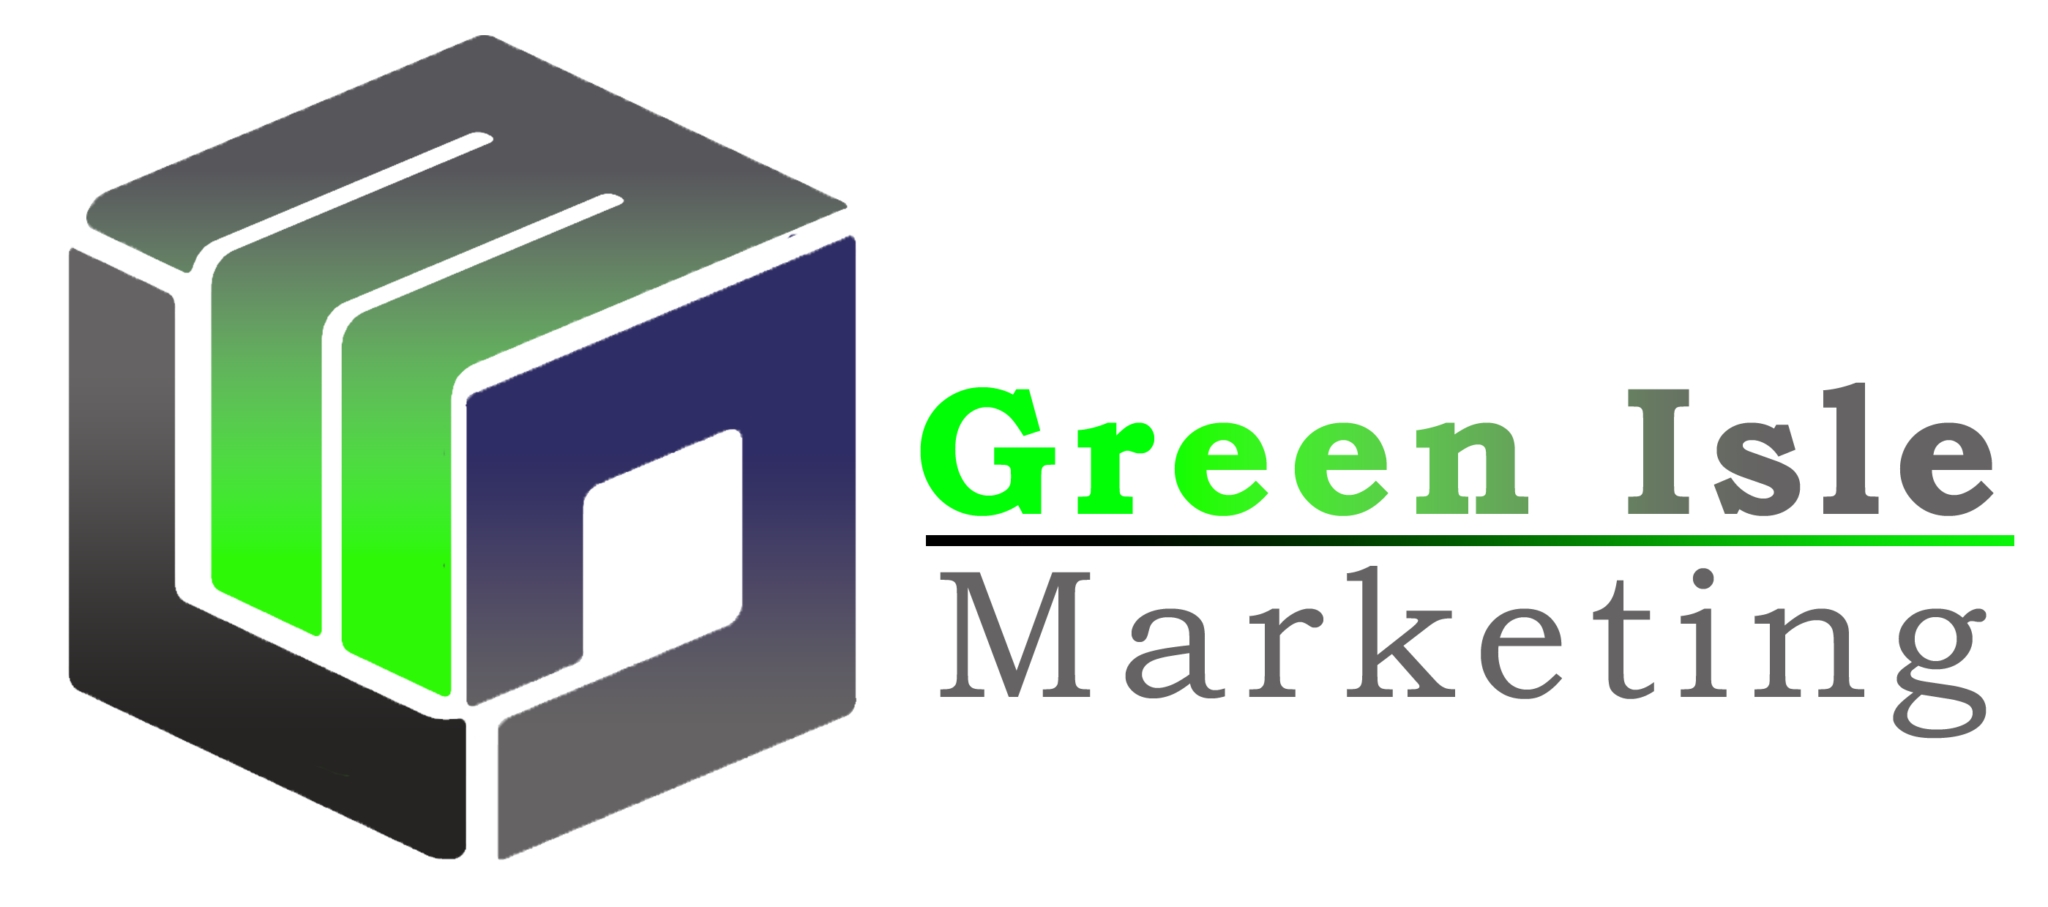 Green Isle Marketing